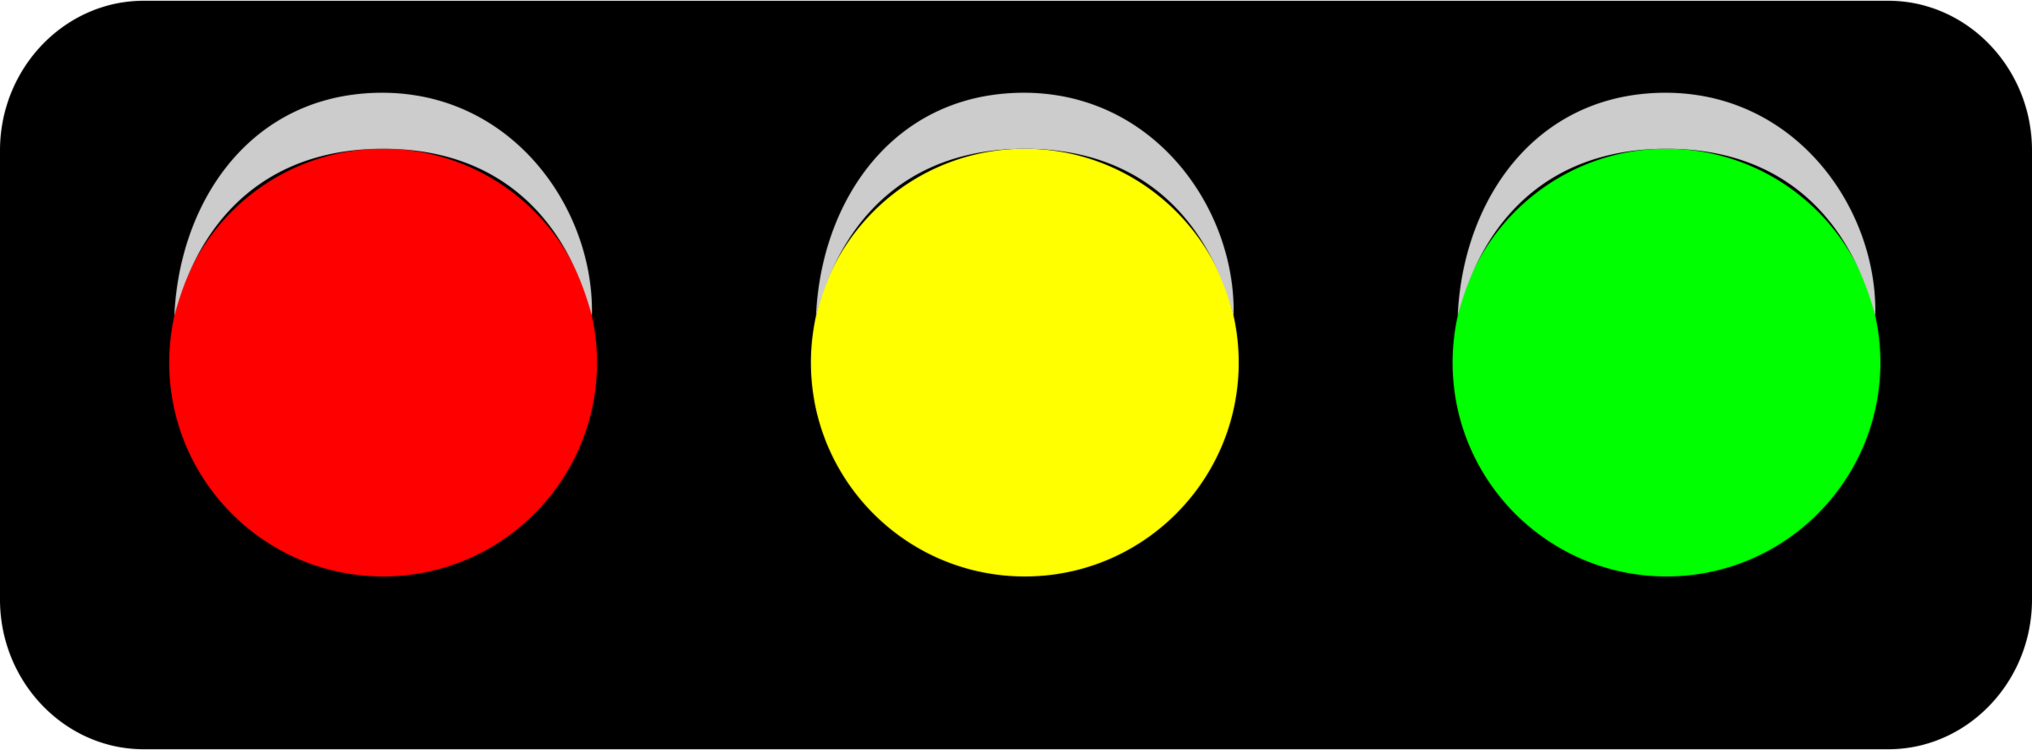 Circle,Yellow,Traffic Light